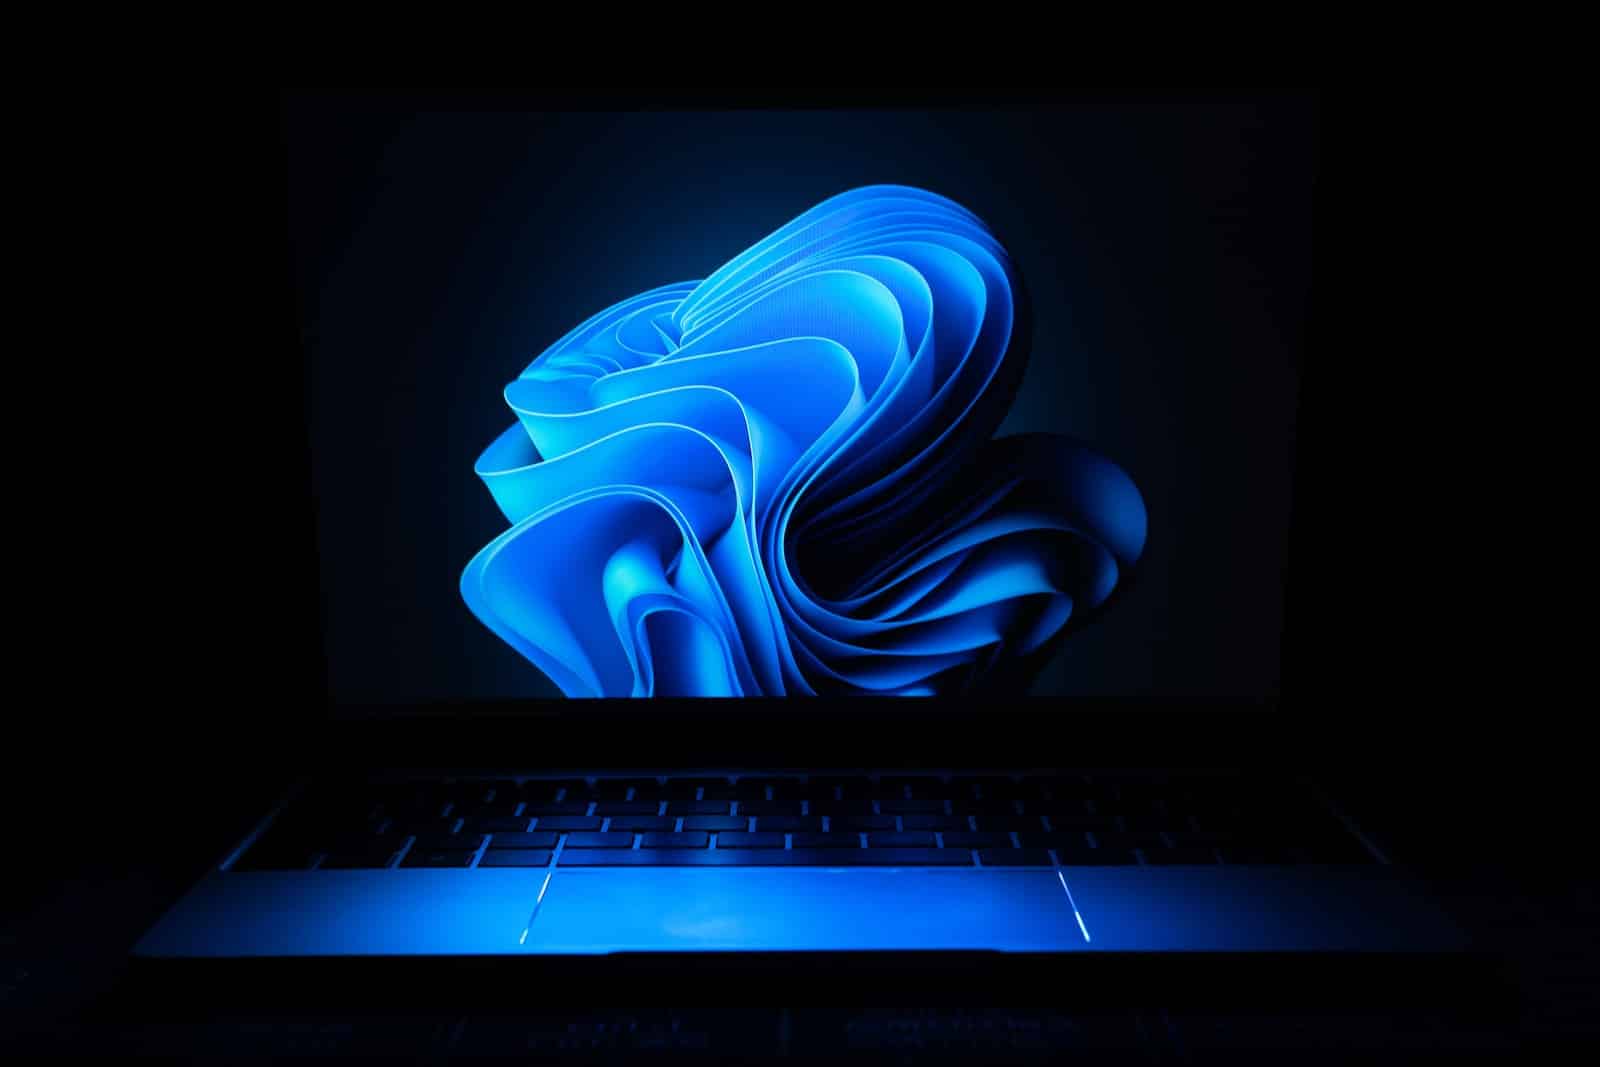 a macbook air laptop in the dark